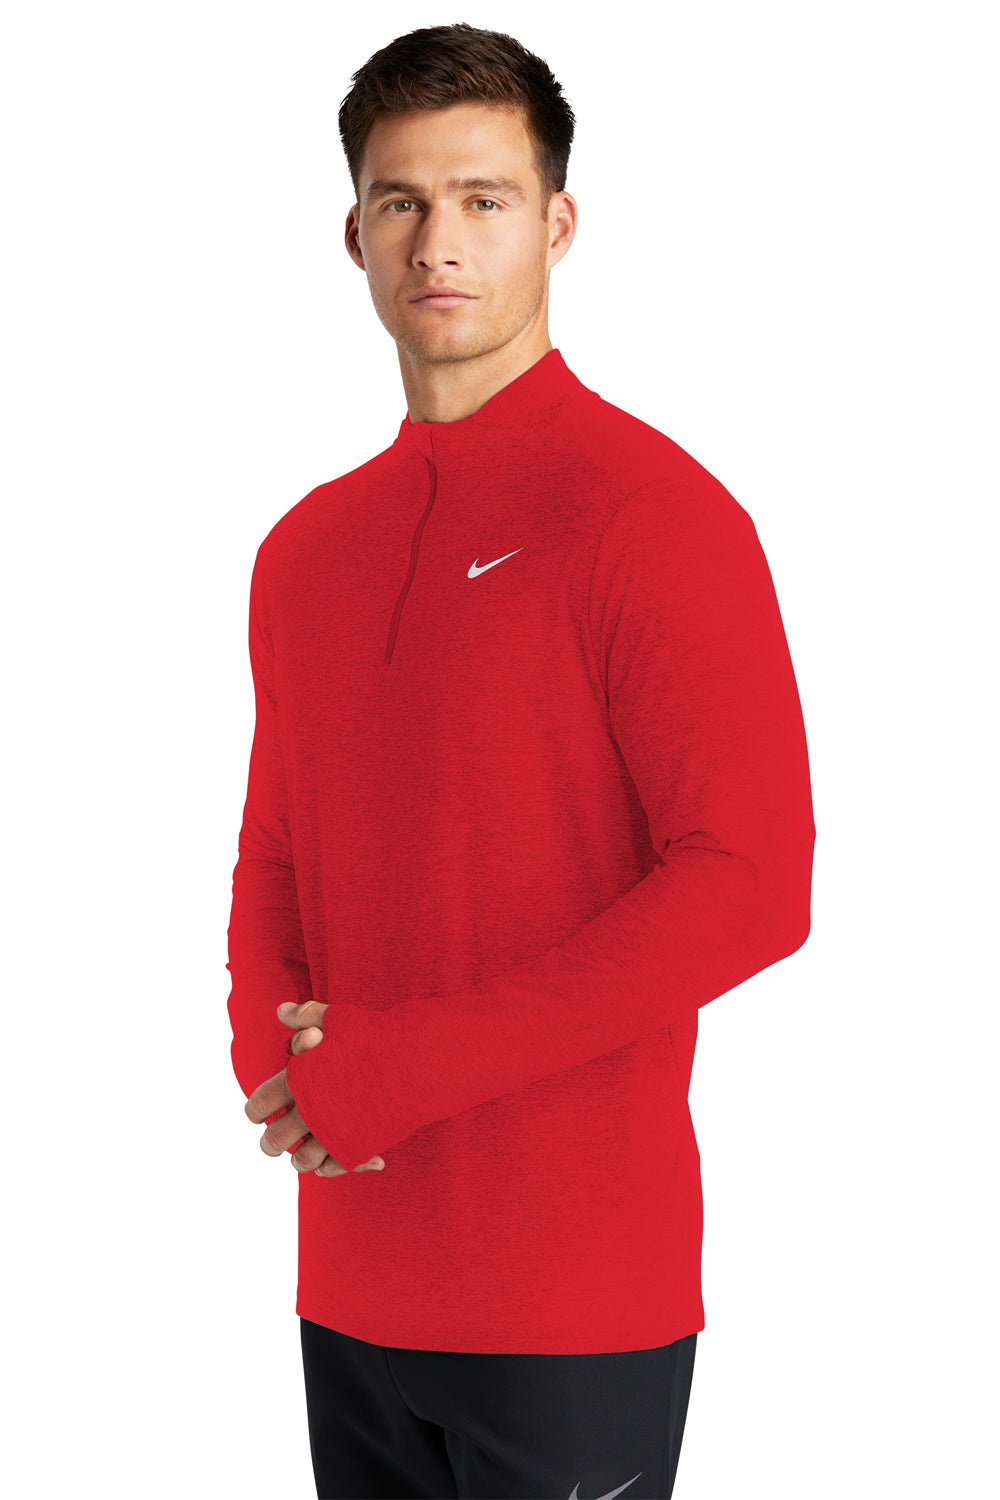 Nike NKDH4949 Mens Element Dri-Fit Moisture Wicking 1/4 Zip Sweatshirt Scarlet Red Model 3Q